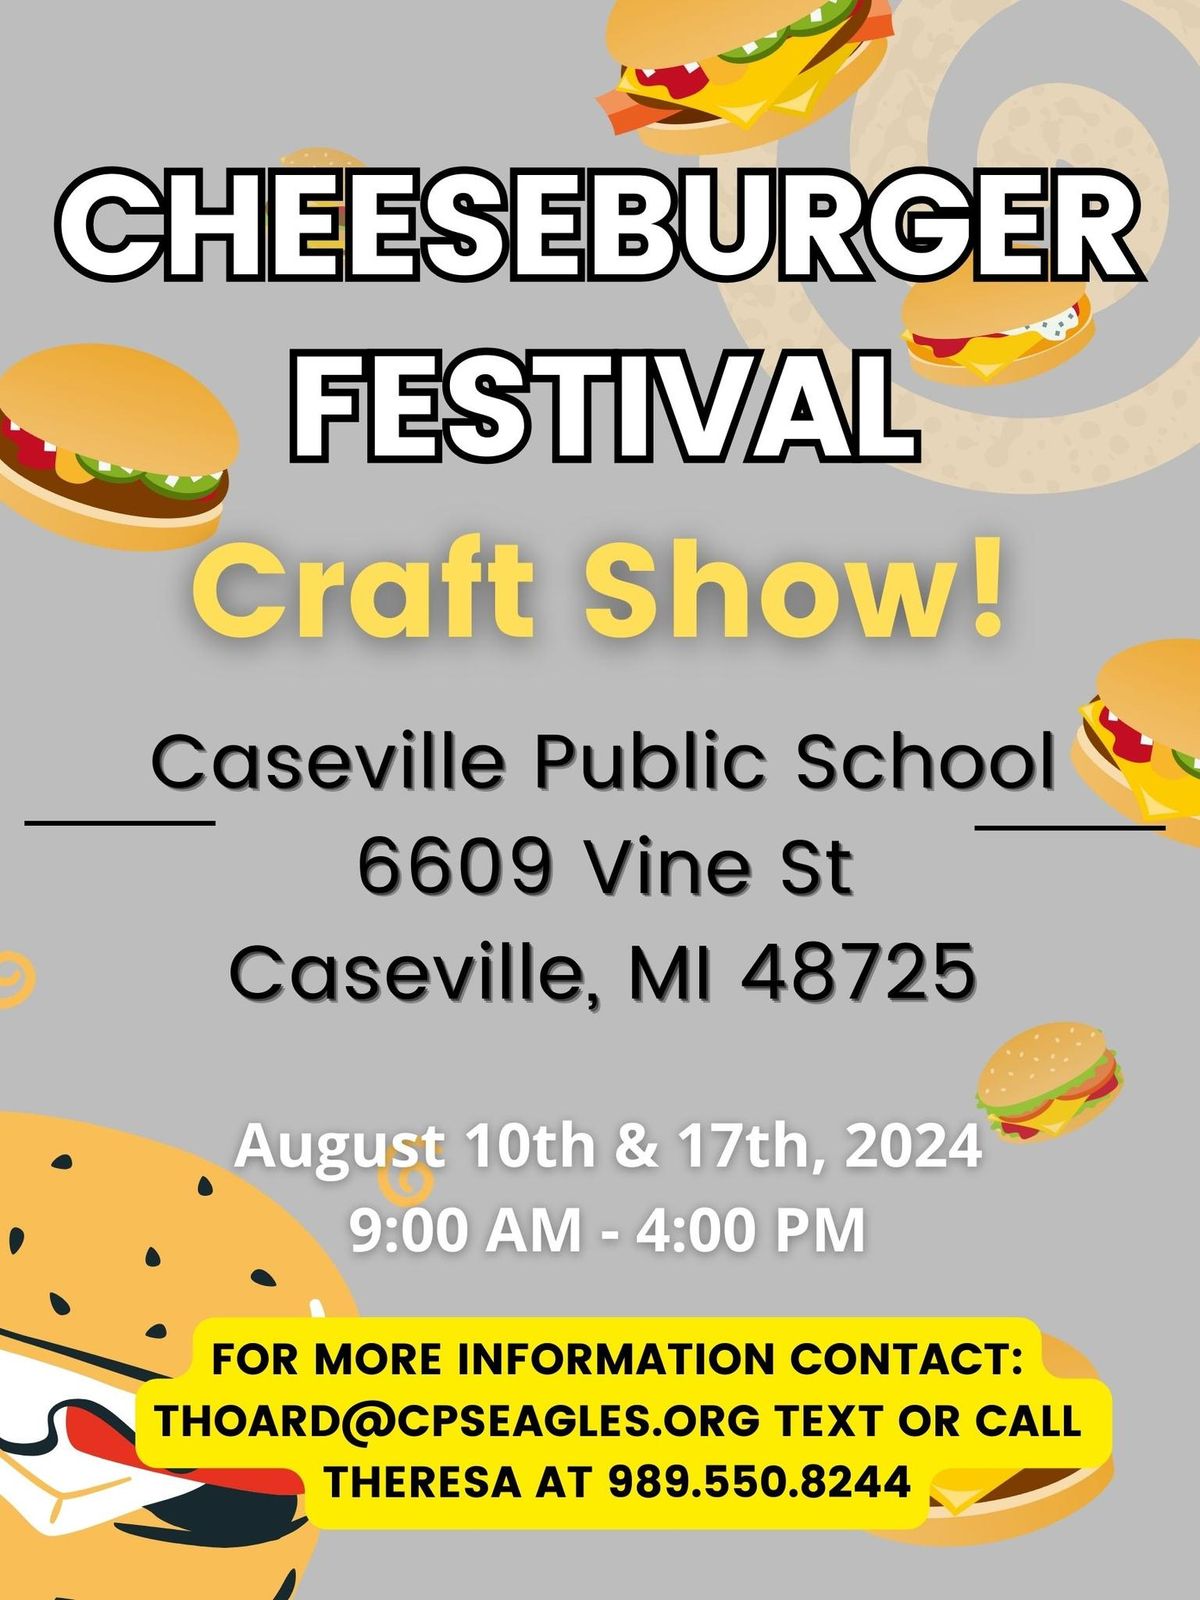 Cheeseburger Festival Craft Show